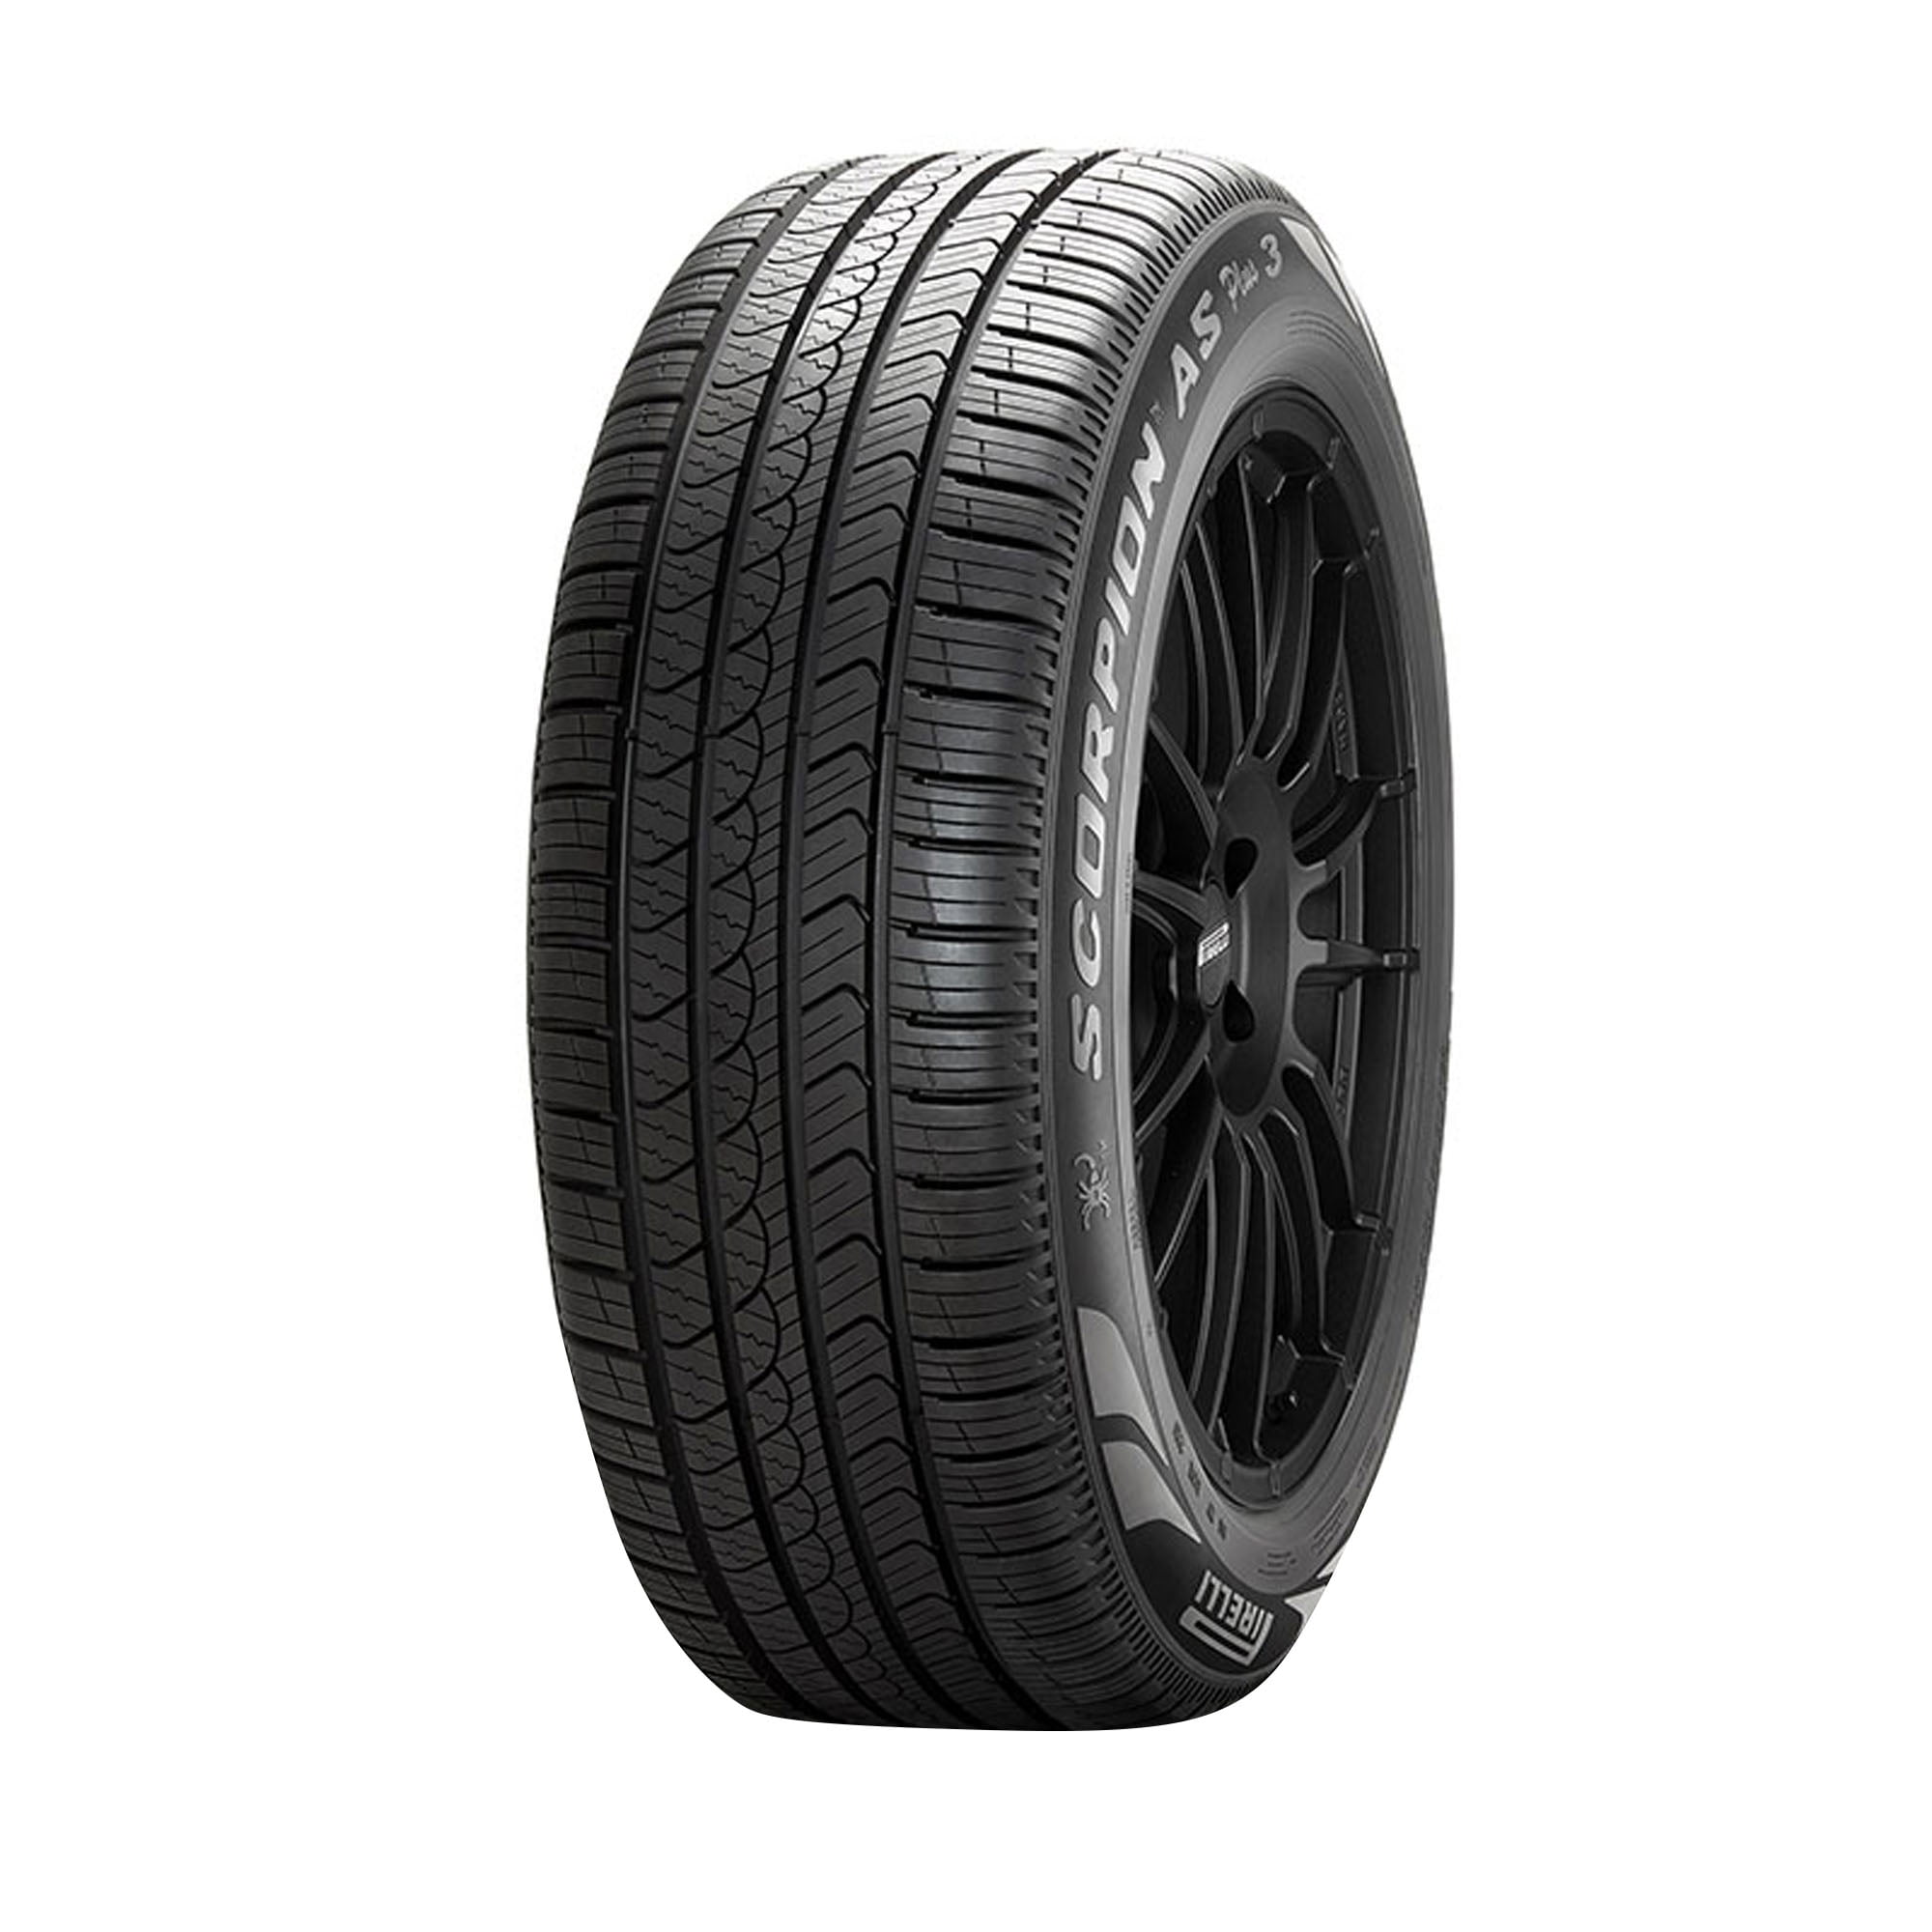 Pirelli Scorpion All Season Plus 3 All Season 235/65R18 106H SUV/Crossover Tire